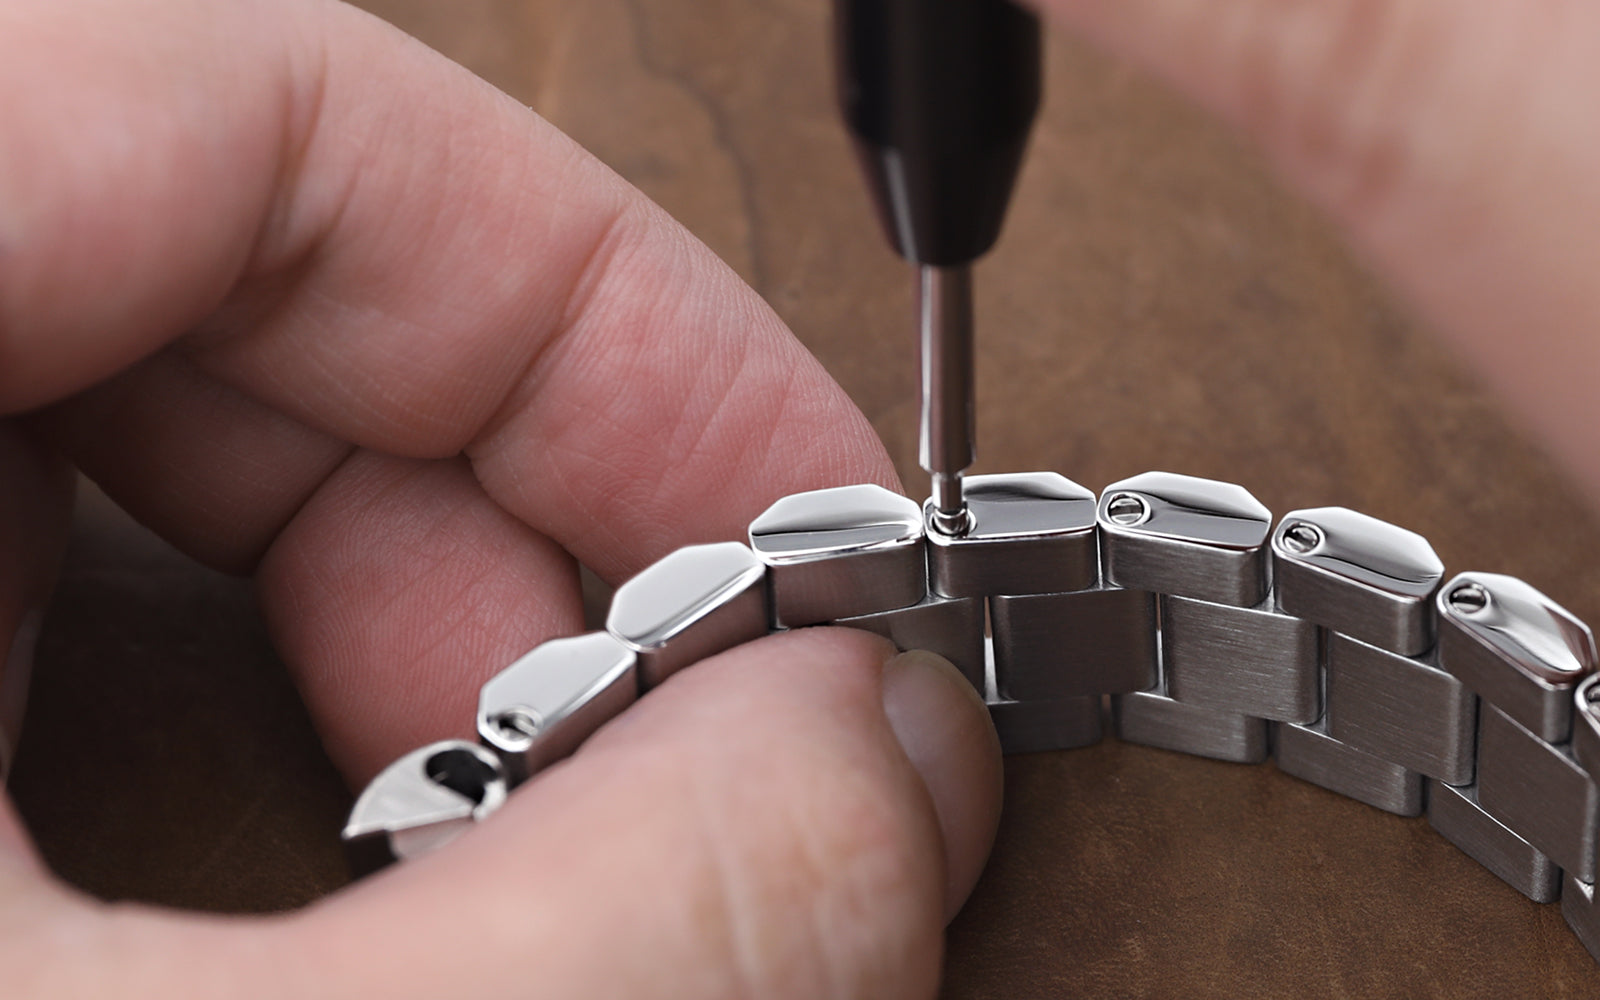 Watch Bracelet Length adjustment screwdriver, Professional Watch band tools